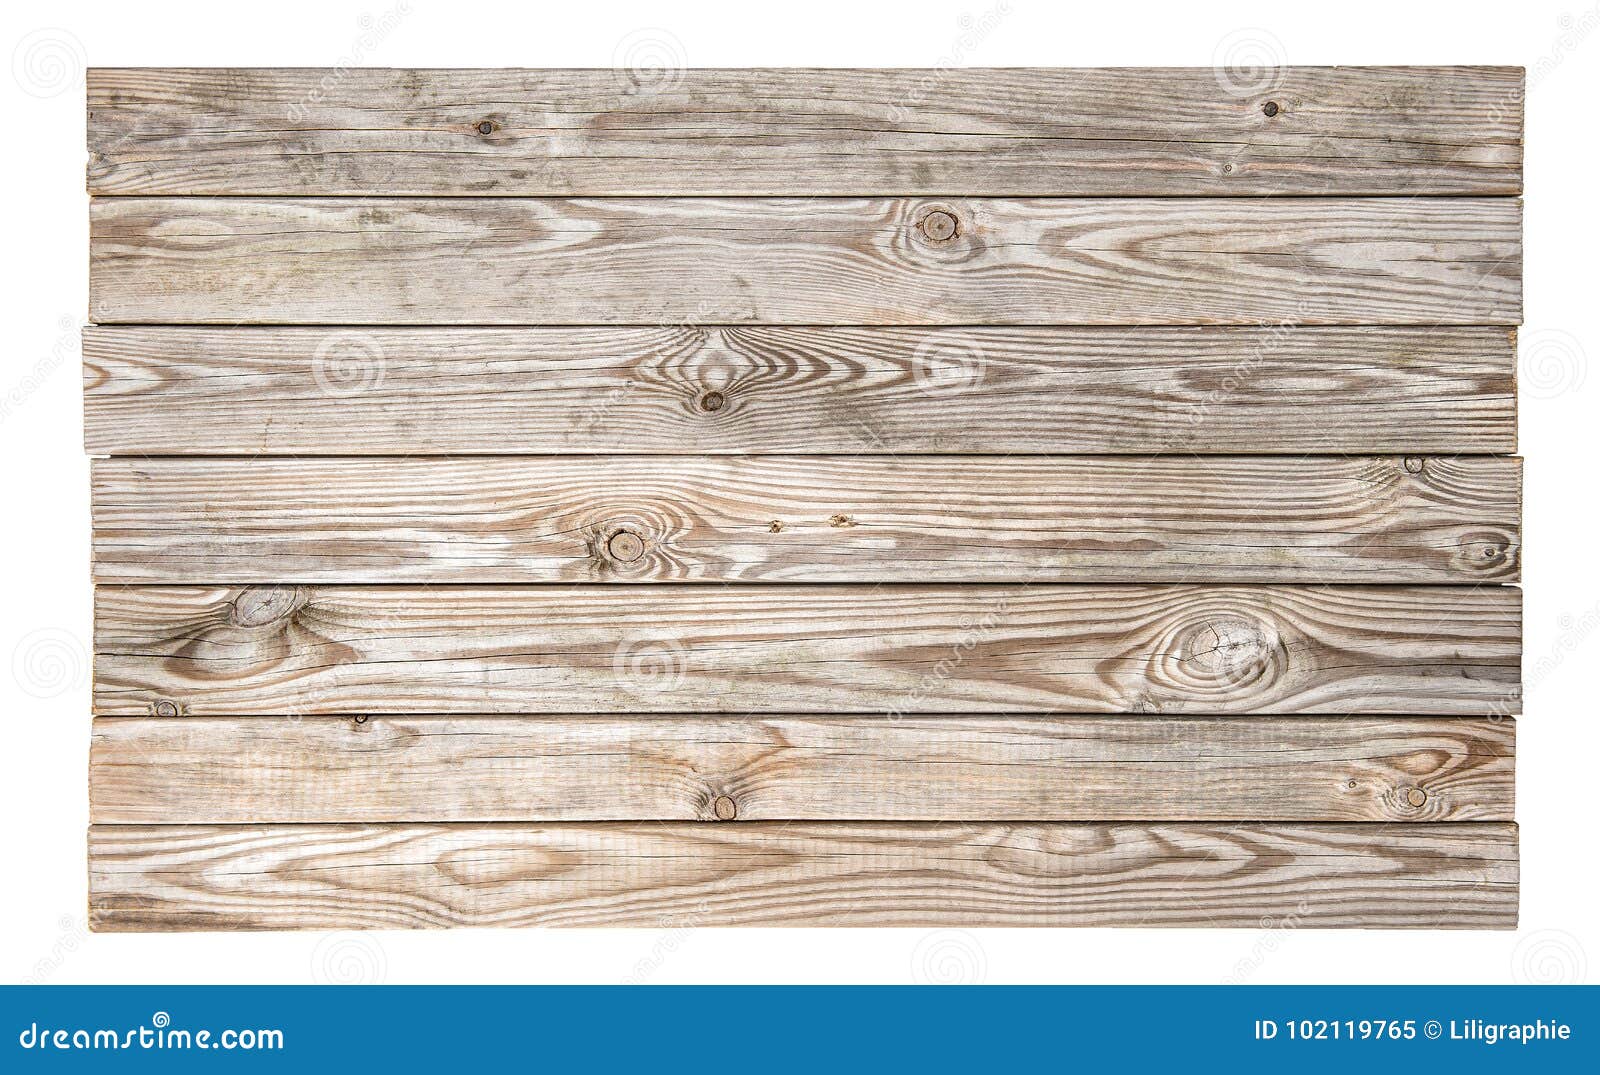 Wooden Background Natural Wood Pattern Rustic Desk Stock Image